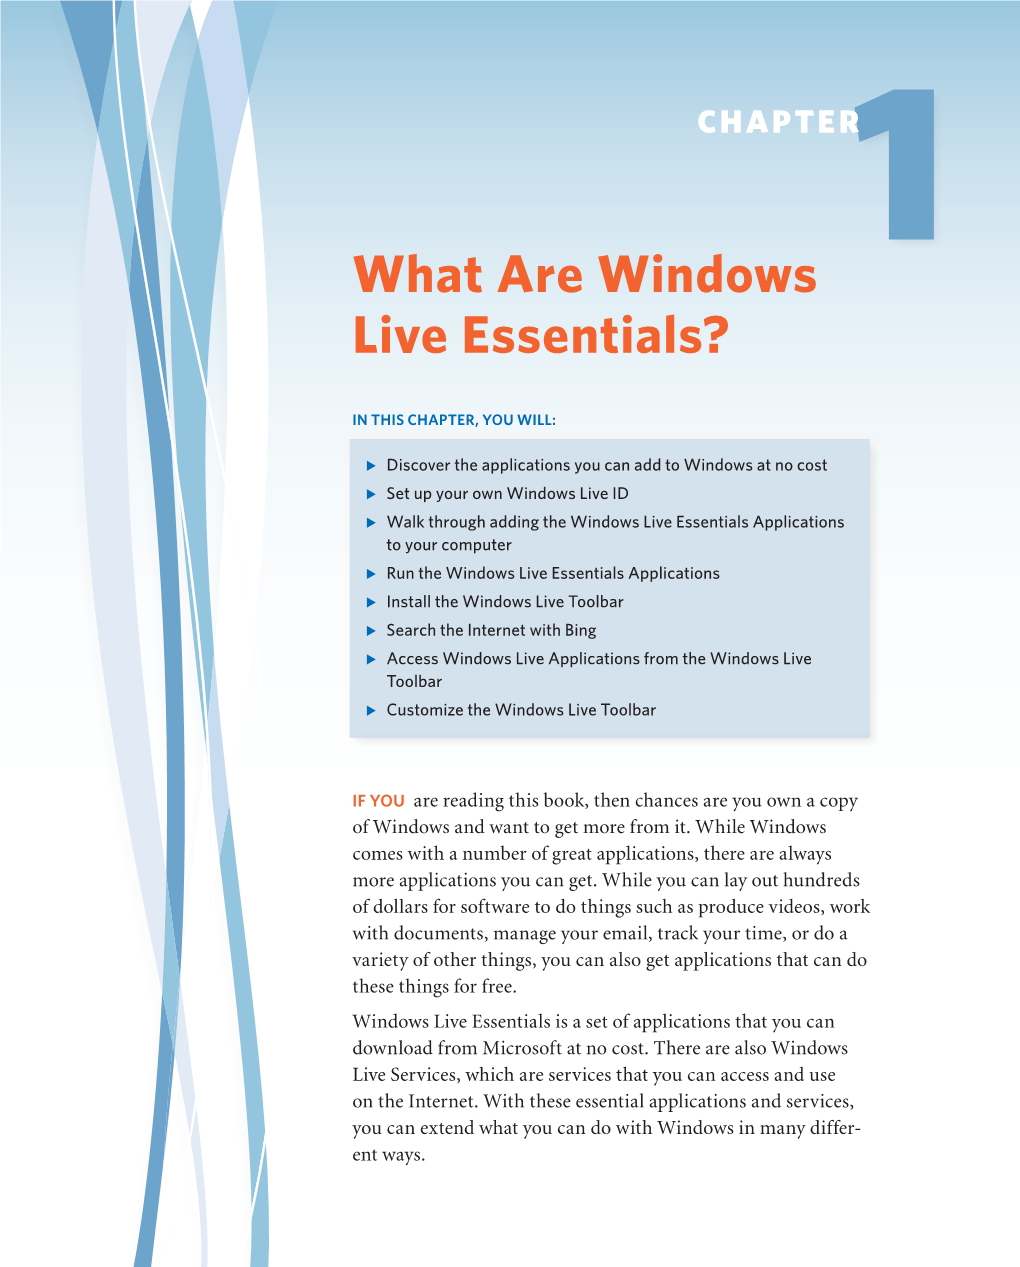 What Are Windows Live Essentials?